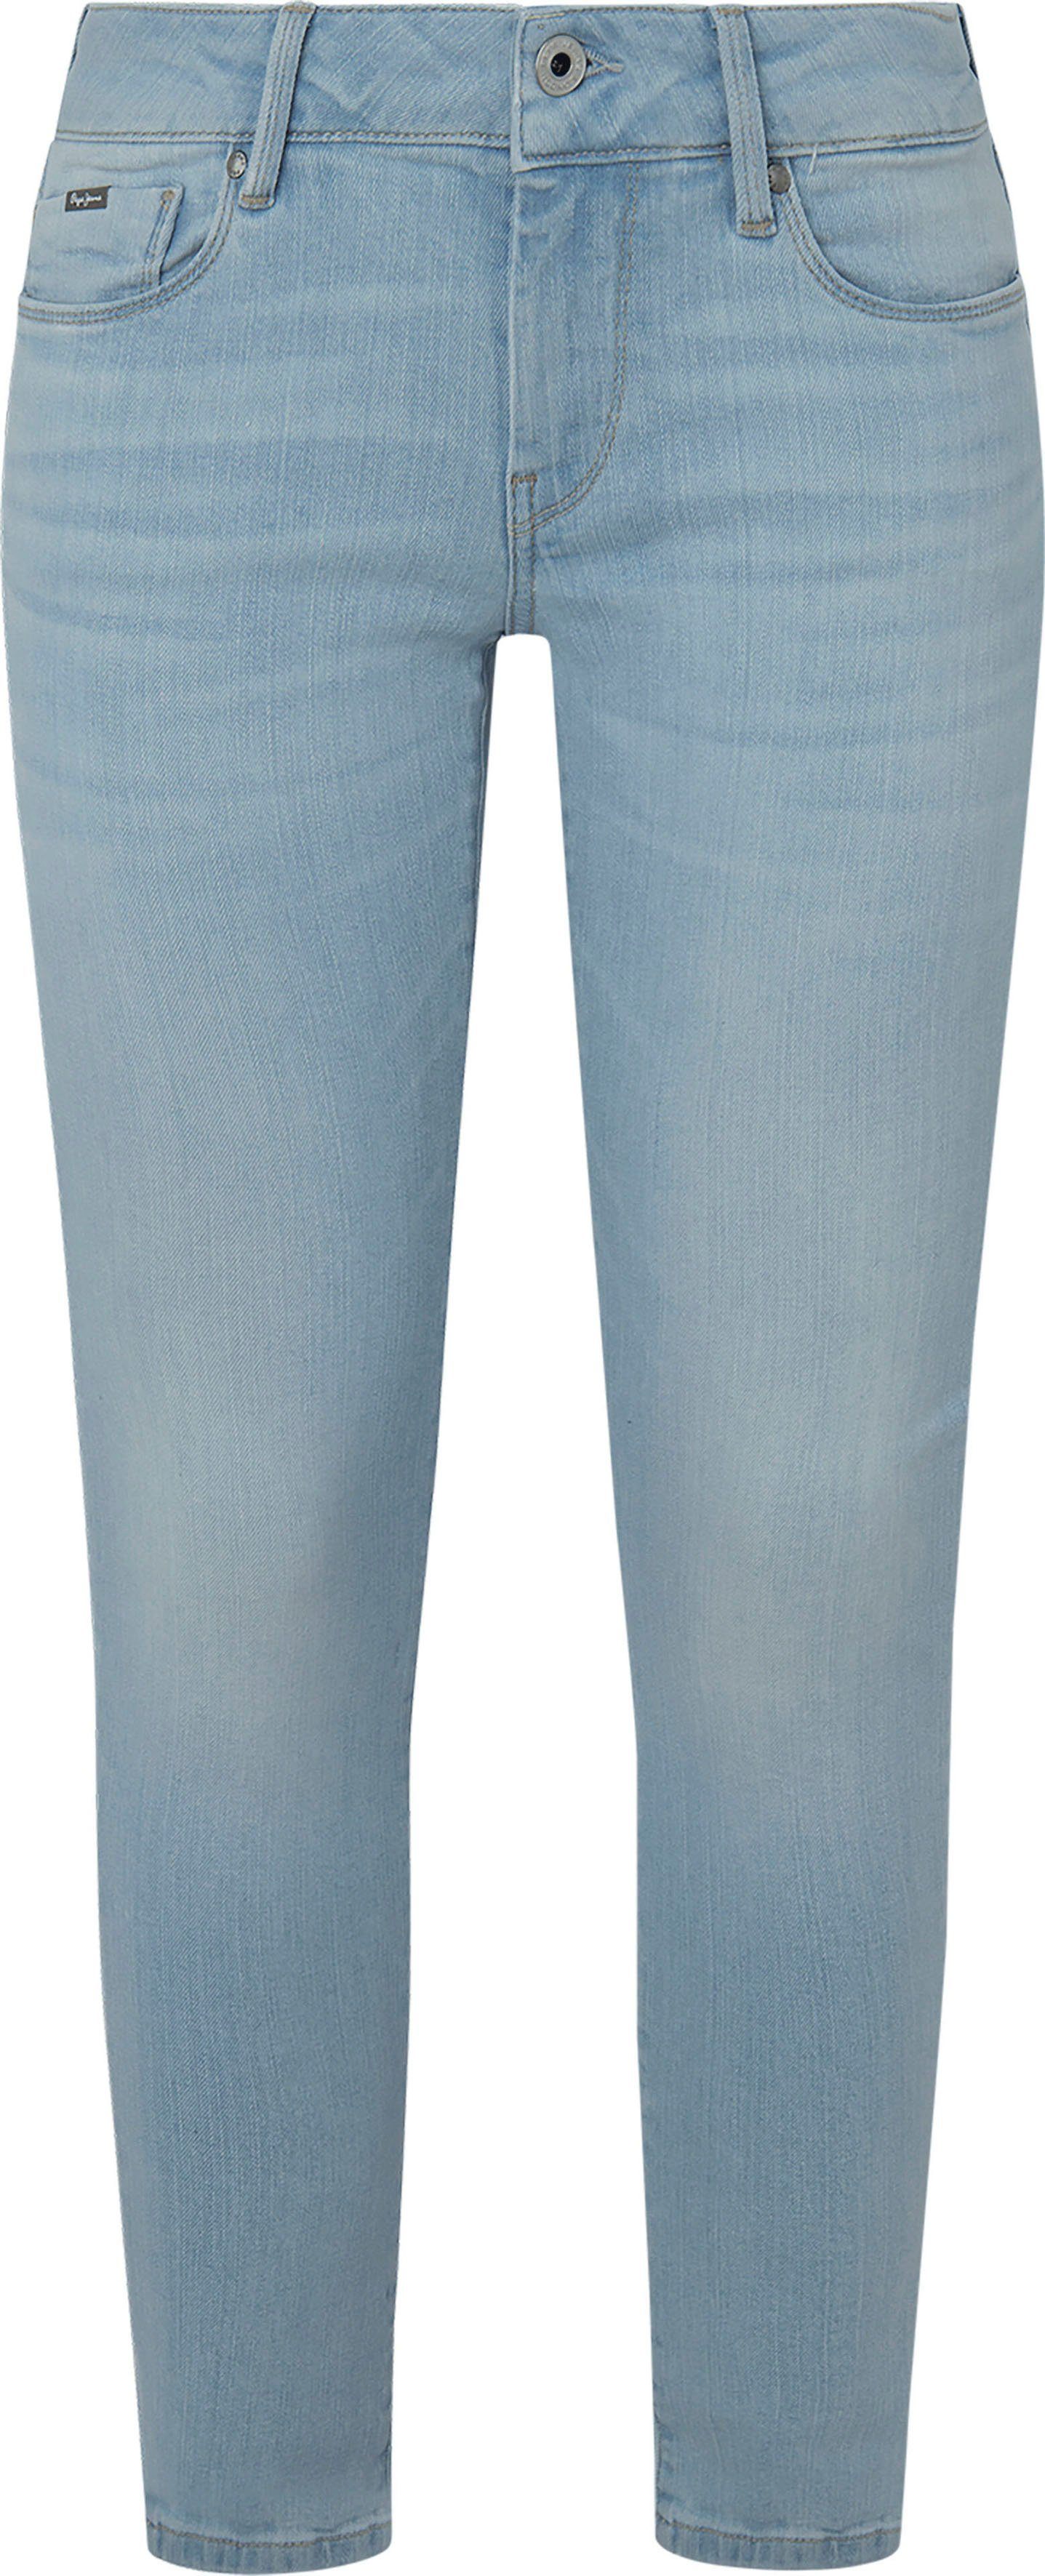 hell Jeans mit SOHO Pepe 1-Knopf im Bund und 5-Pocket-Stil Skinny-fit-Jeans Stretch-Anteil